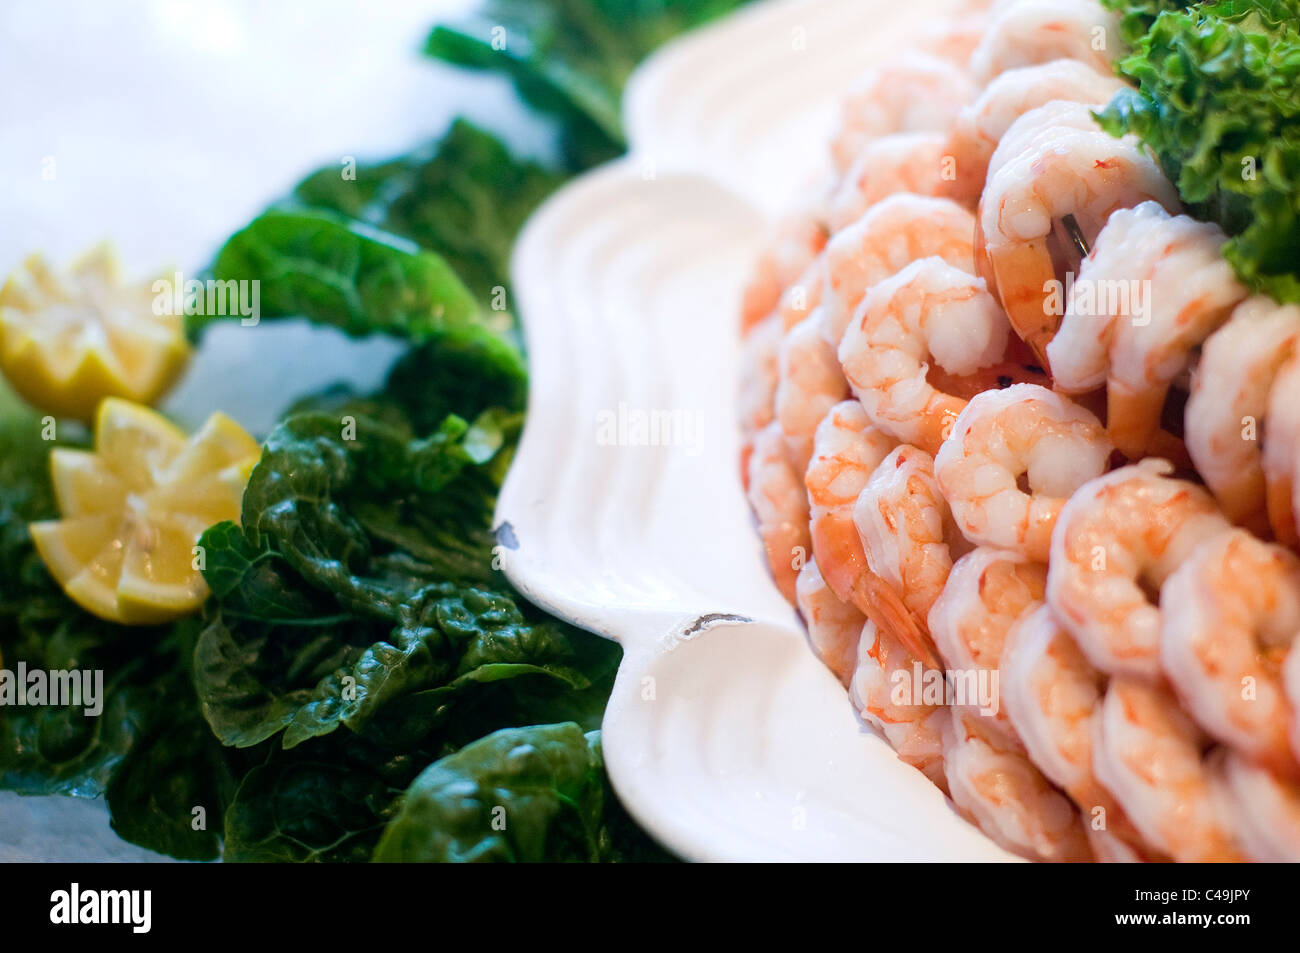 A shrimp platter with garnish. Stock Photo